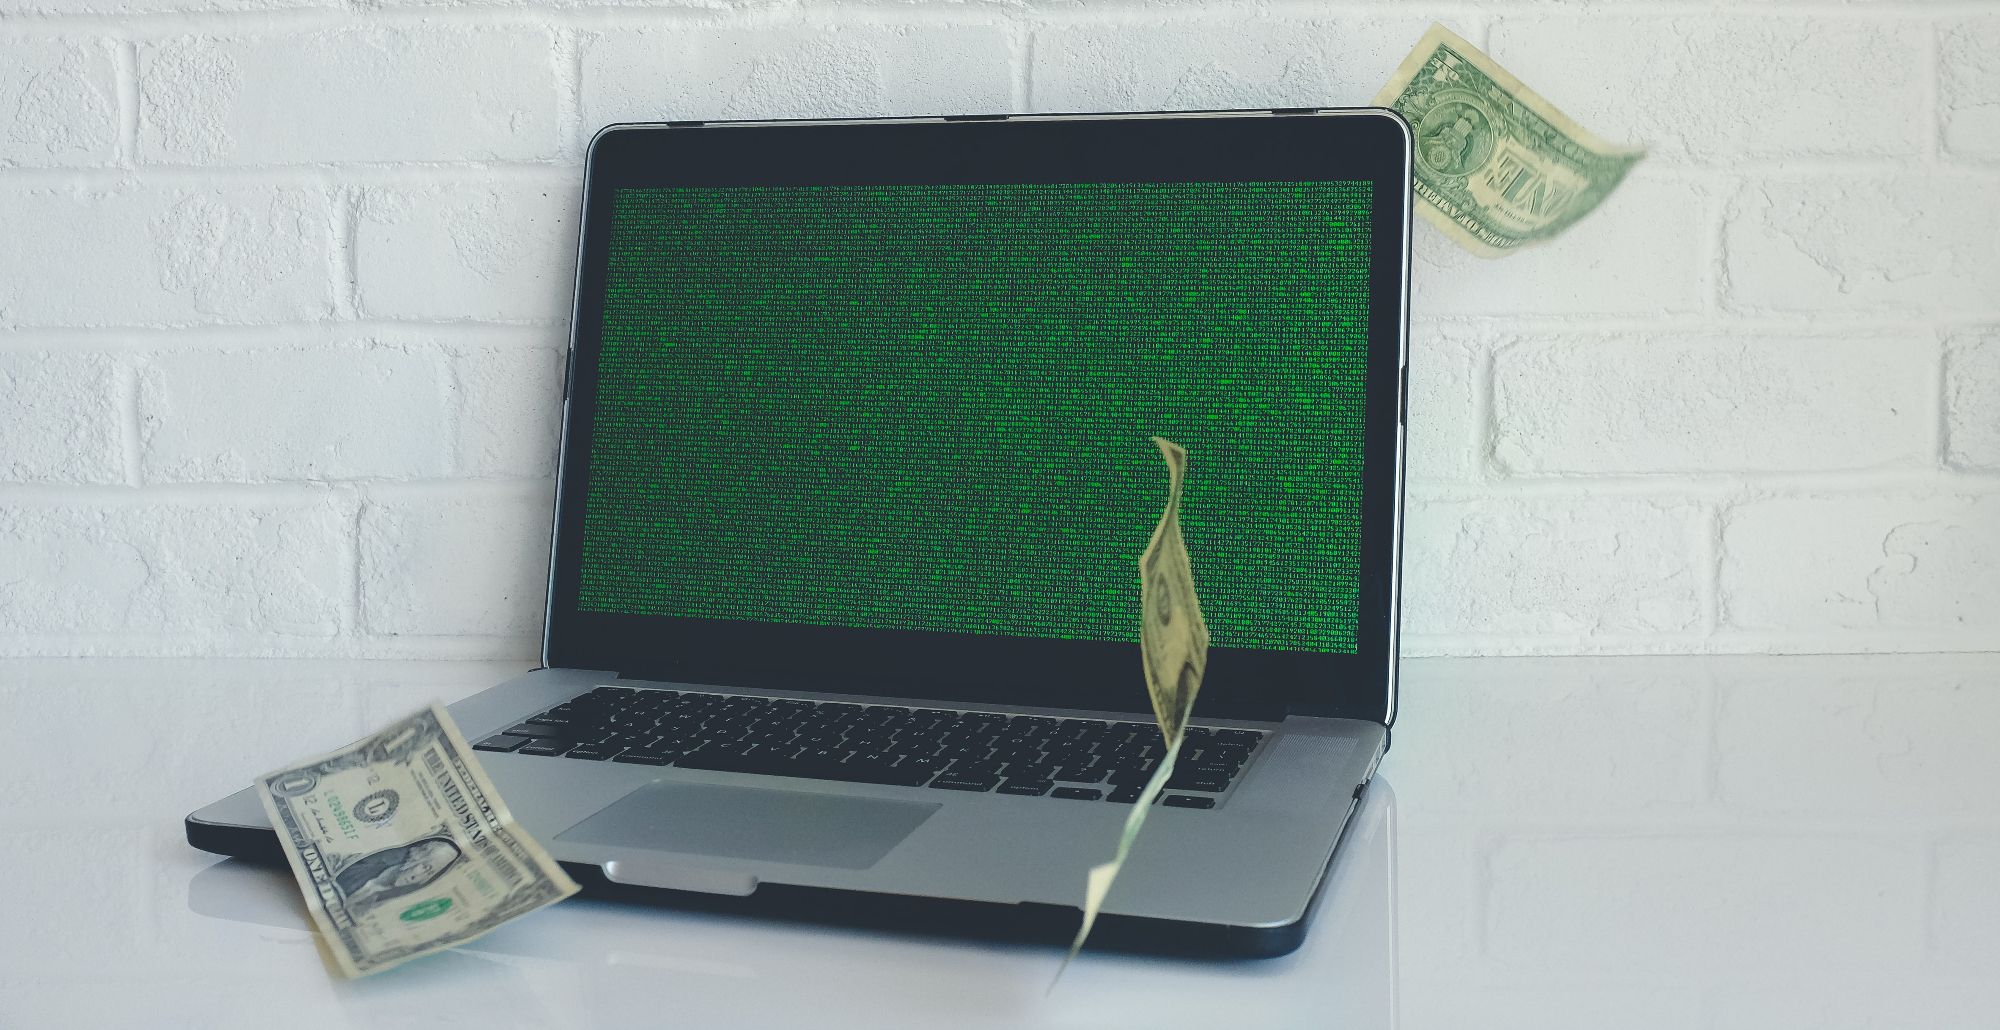 tagihan dolar jatuh di laptop dengan layar hijau